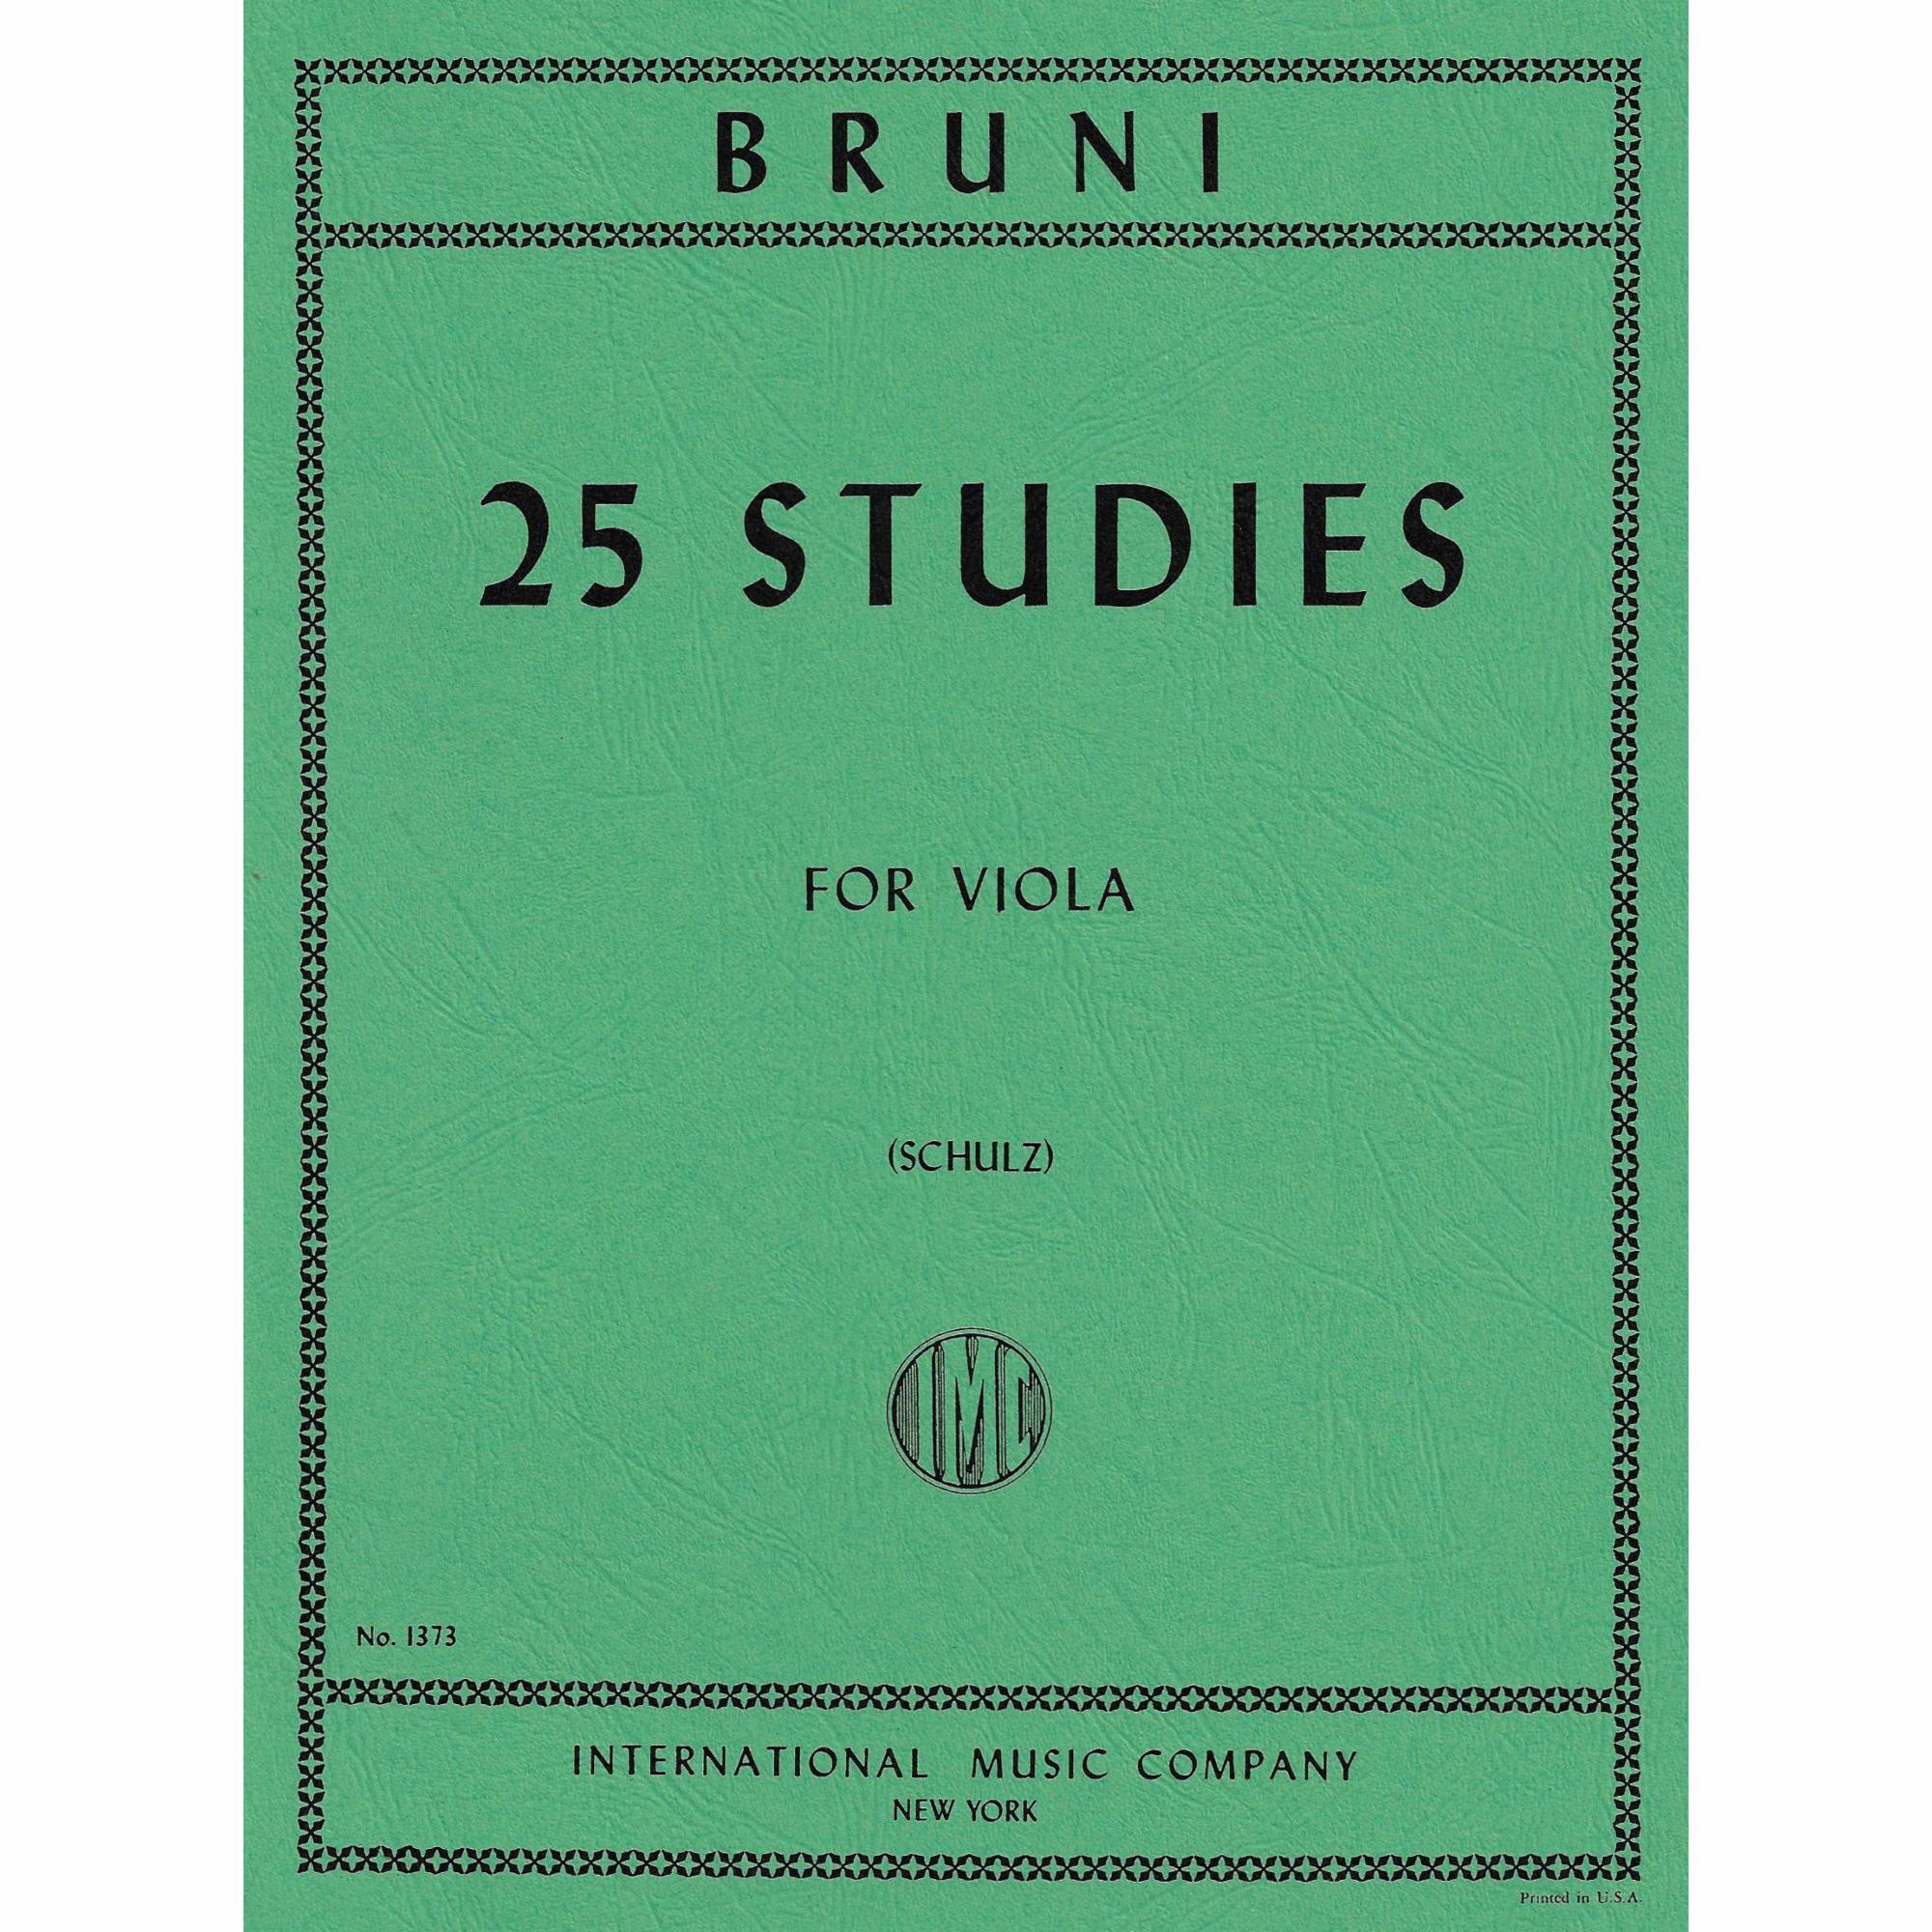 Bruni -- 25 Studies for Viola